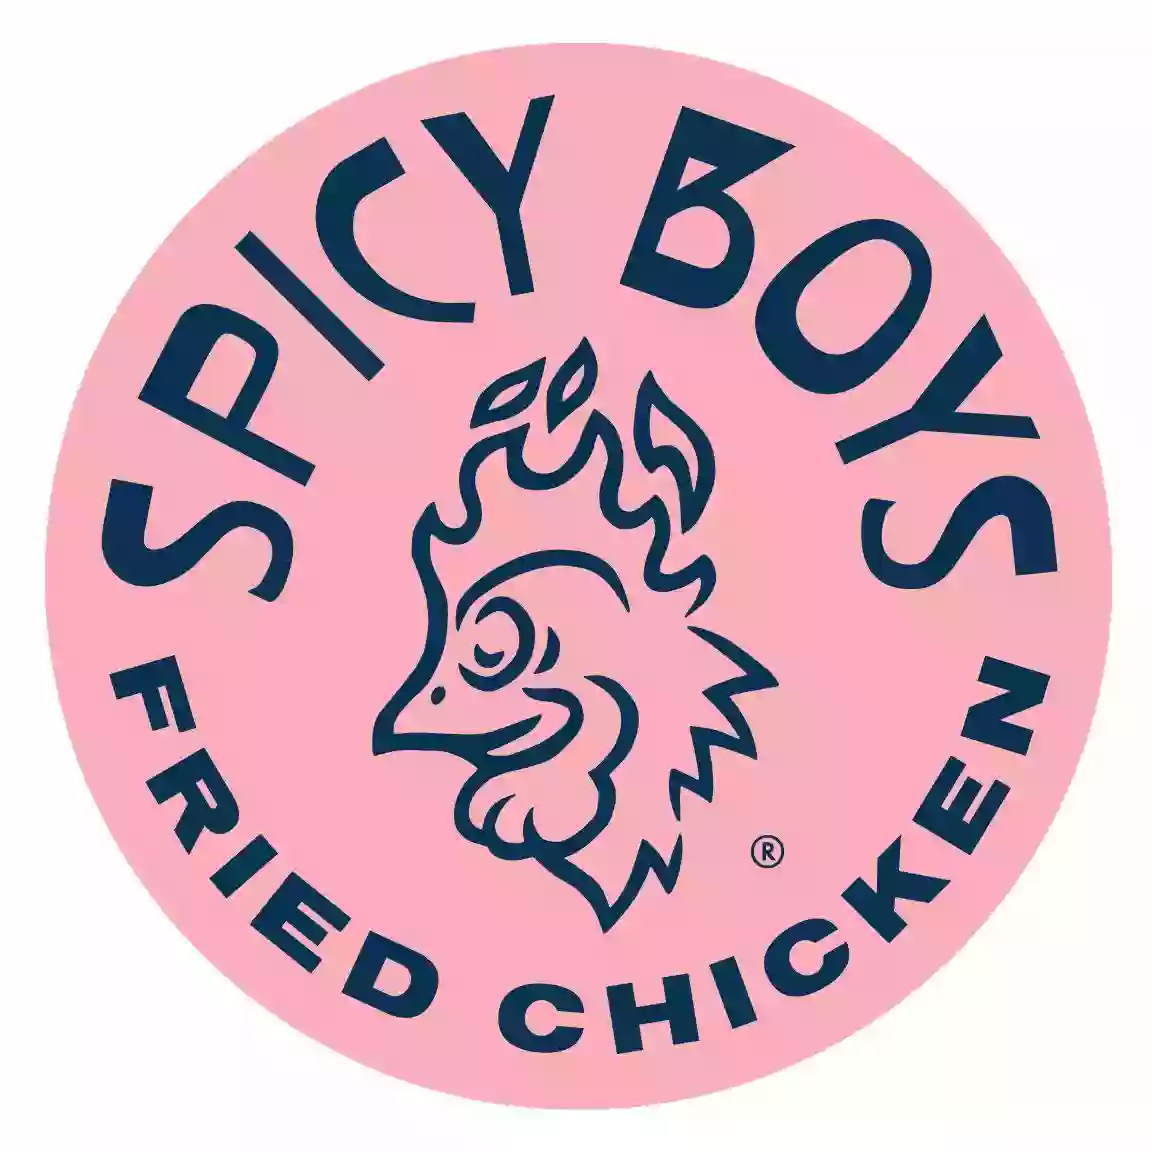 Spicy Boys Fried Chicken